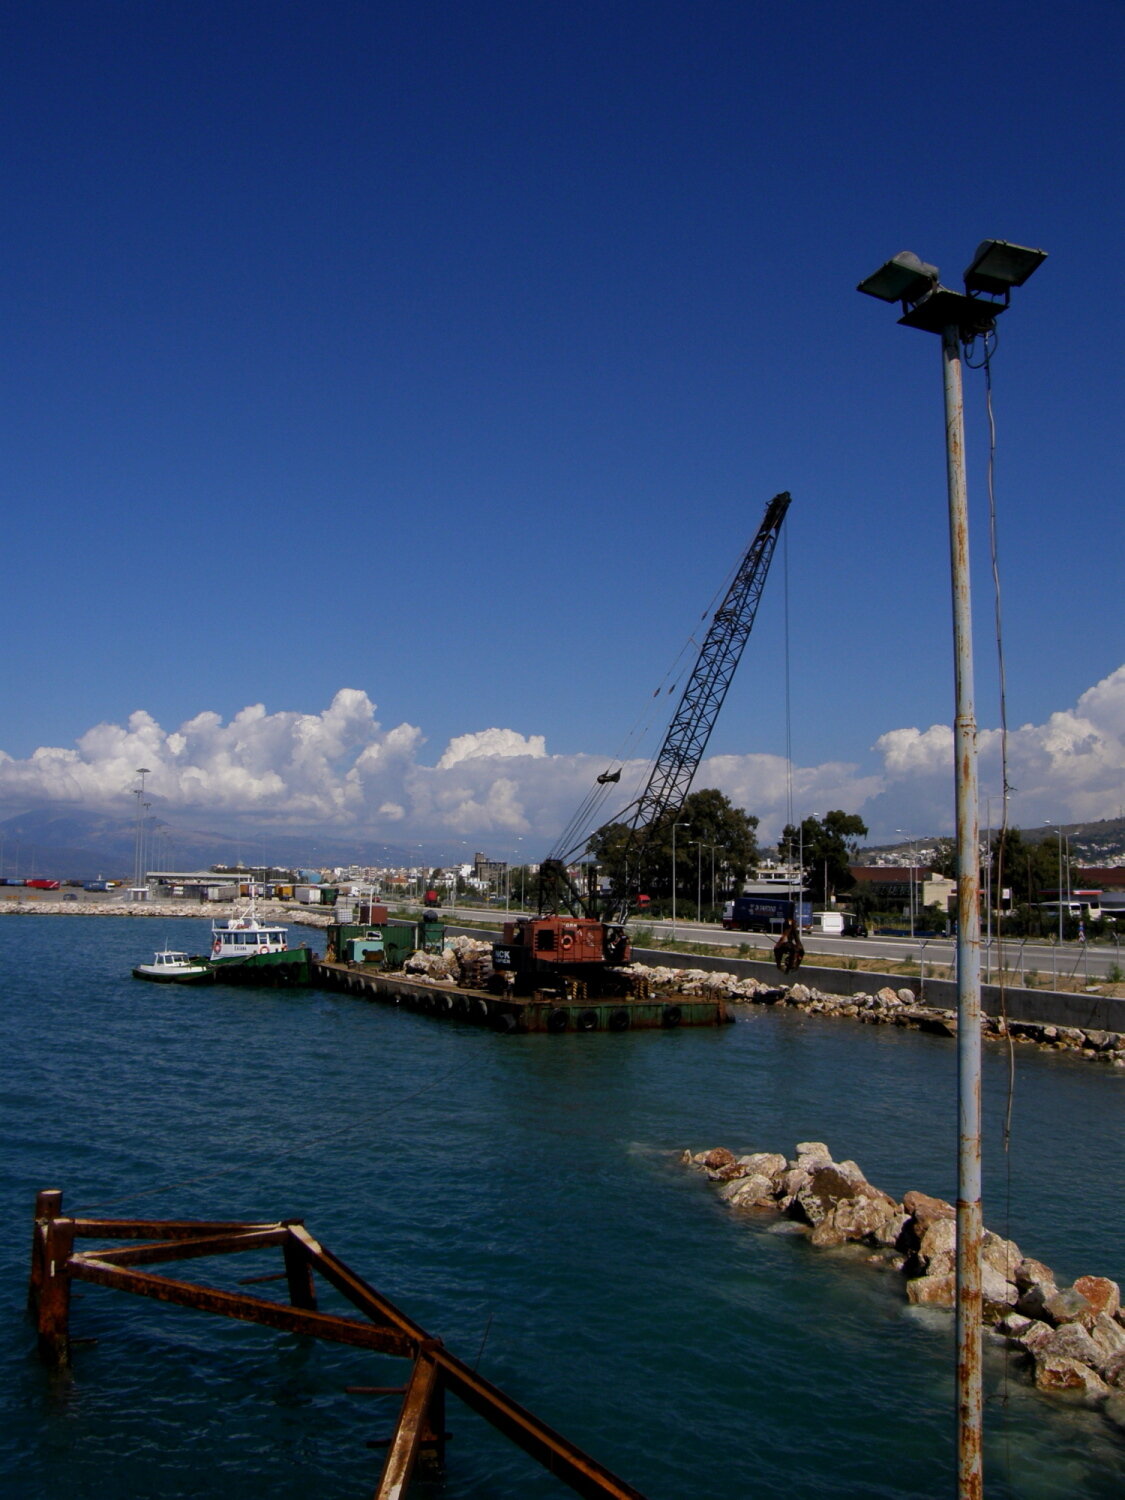 patras south port expansion works 041012 b